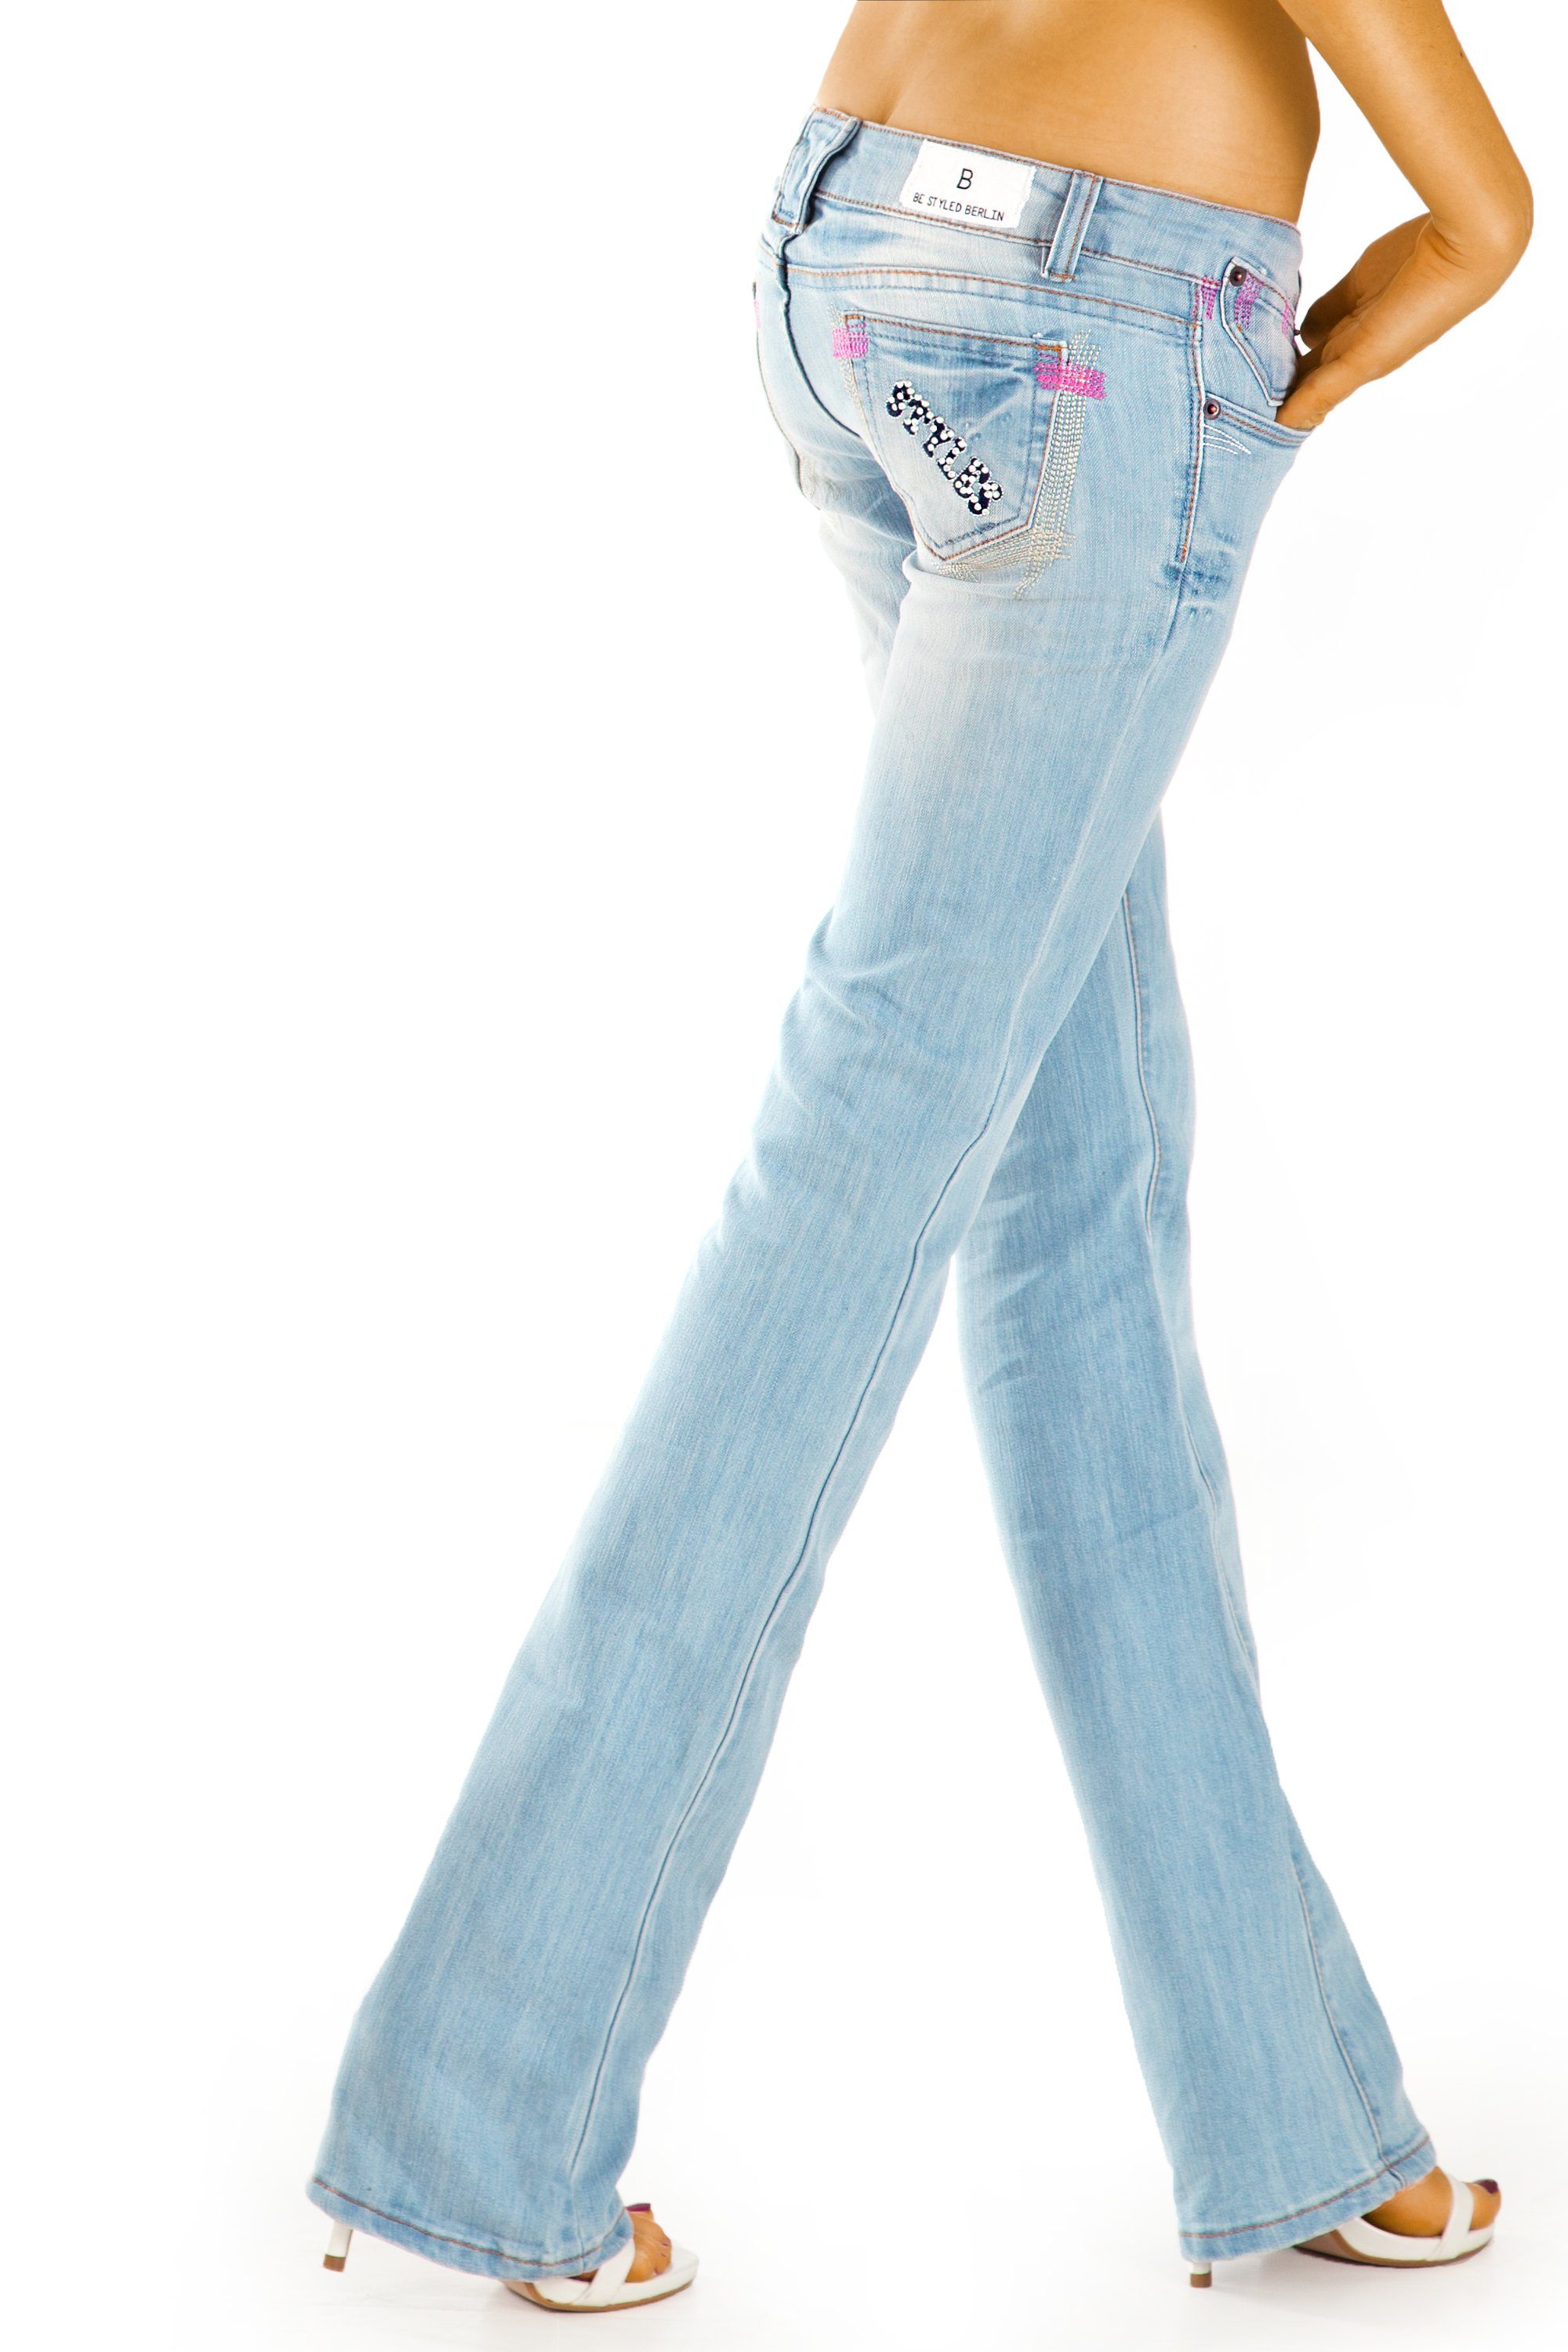 Bootcut styled Bootcut-Jeans Jeanshose niedrige Hüftjeans j37a-1 Damen sehr Leibhöhe, - mit Leibhöhe Stretch-Anteil, 5-pOcket-Style - extrem tiefer be